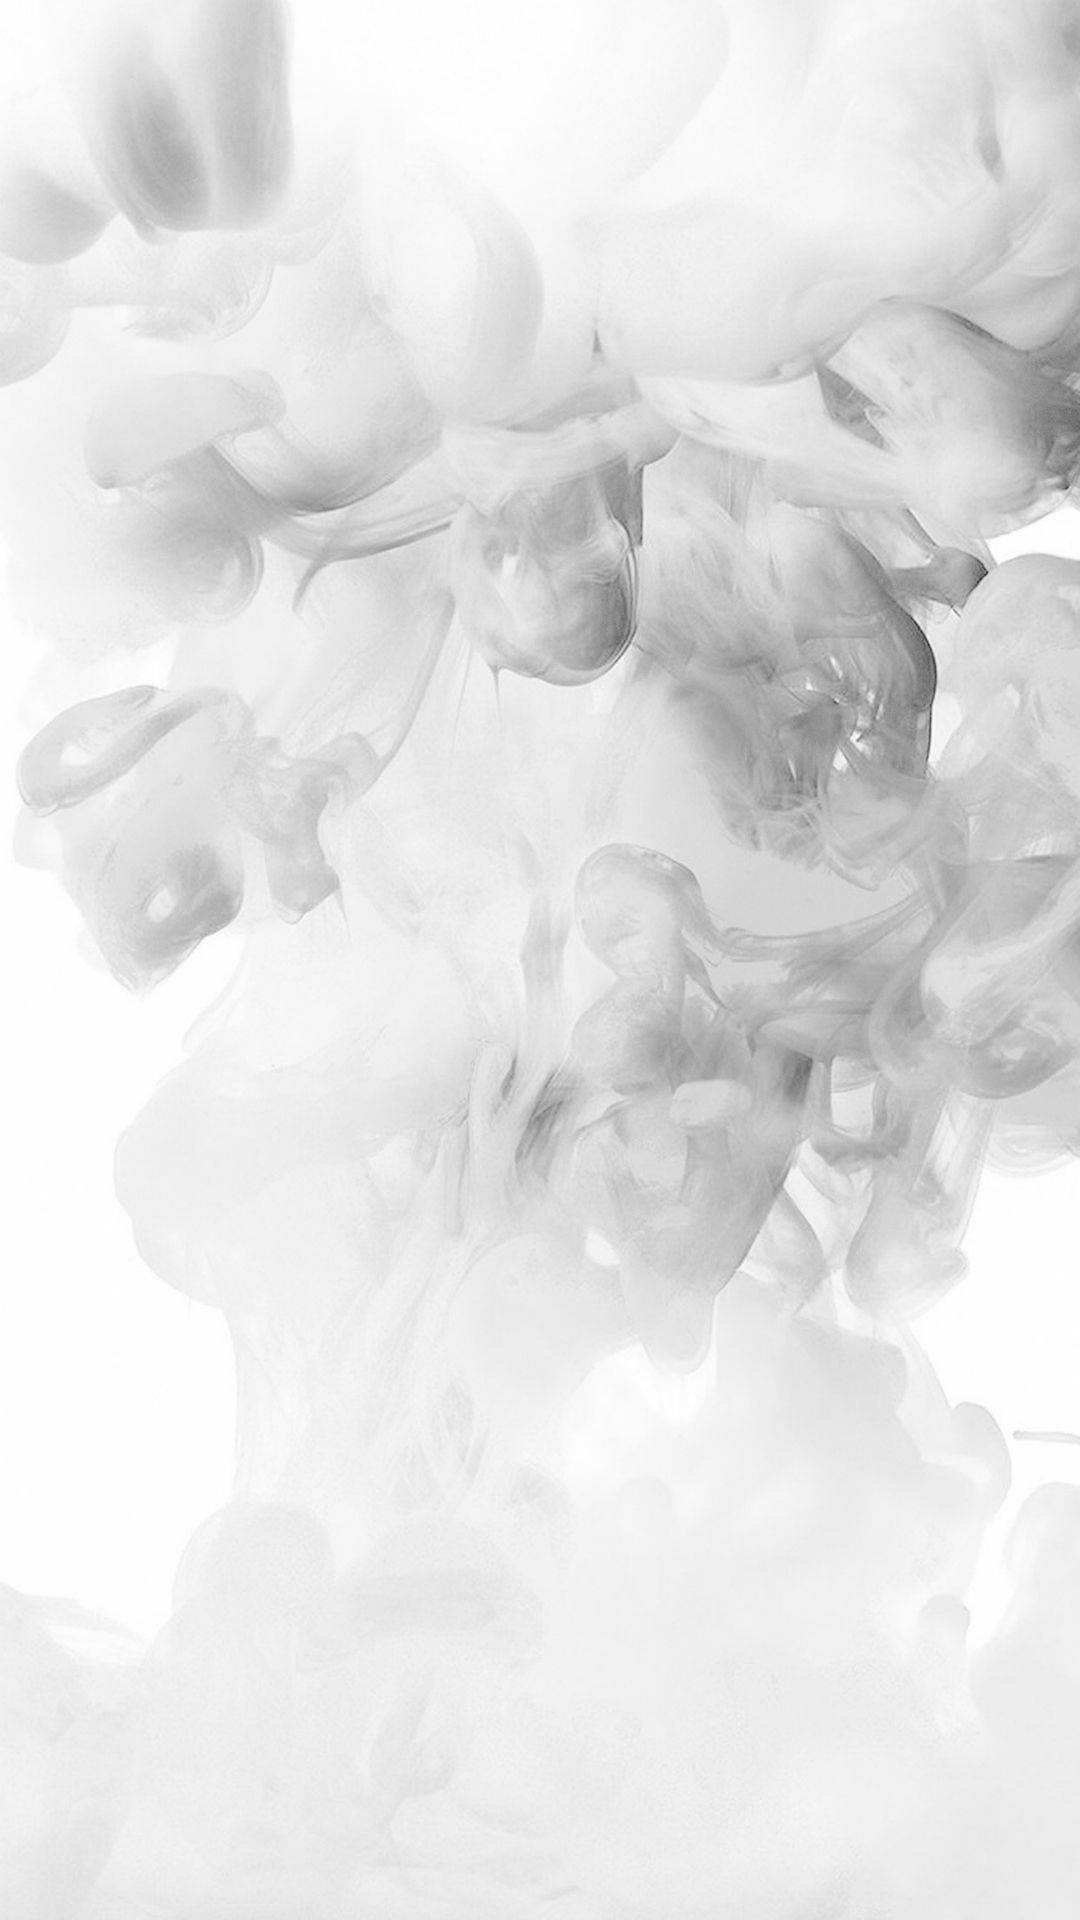 A Mystical White Fog Wallpaper